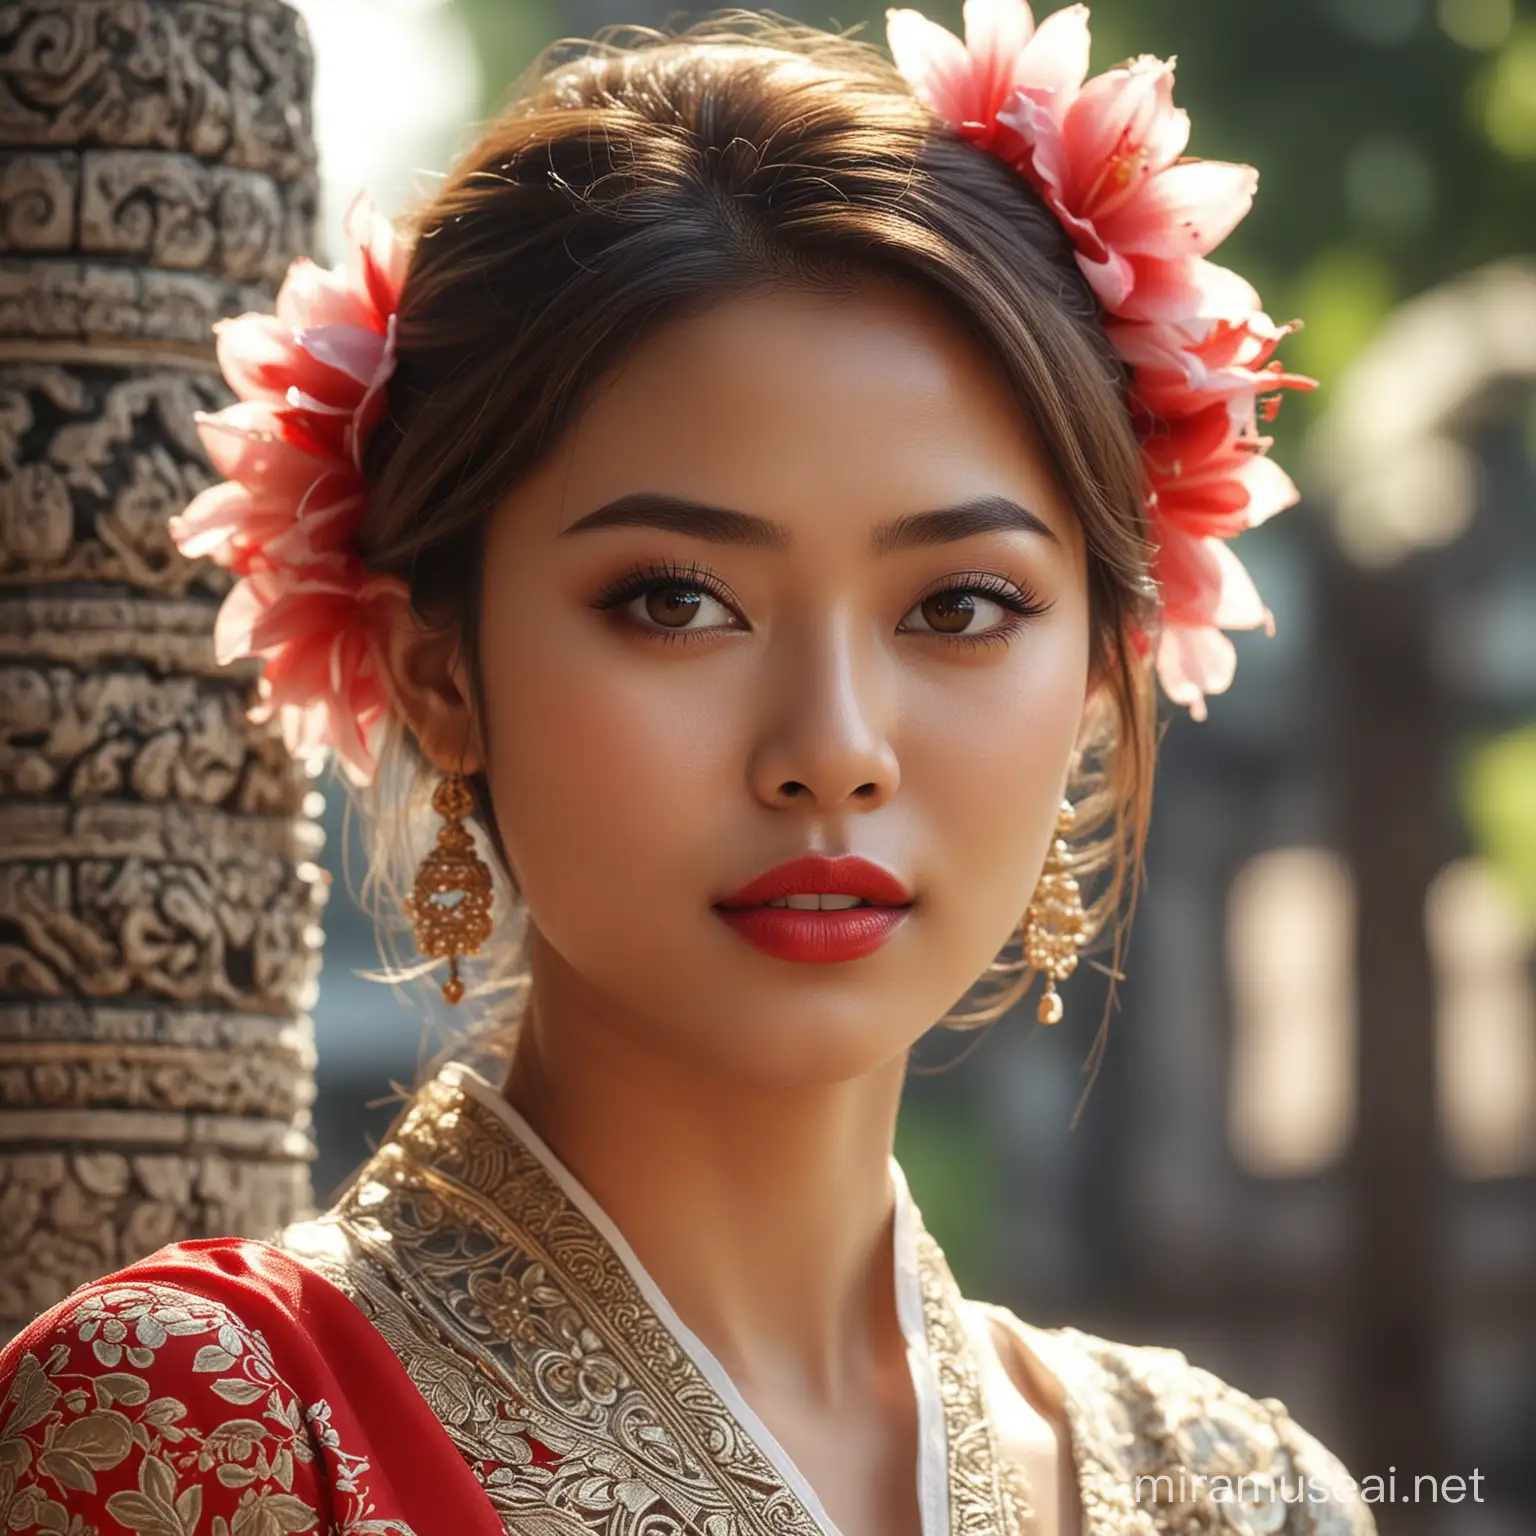 Beautiful Indonesian Girl Portrait with Balinese Kebaya at Bali Temple